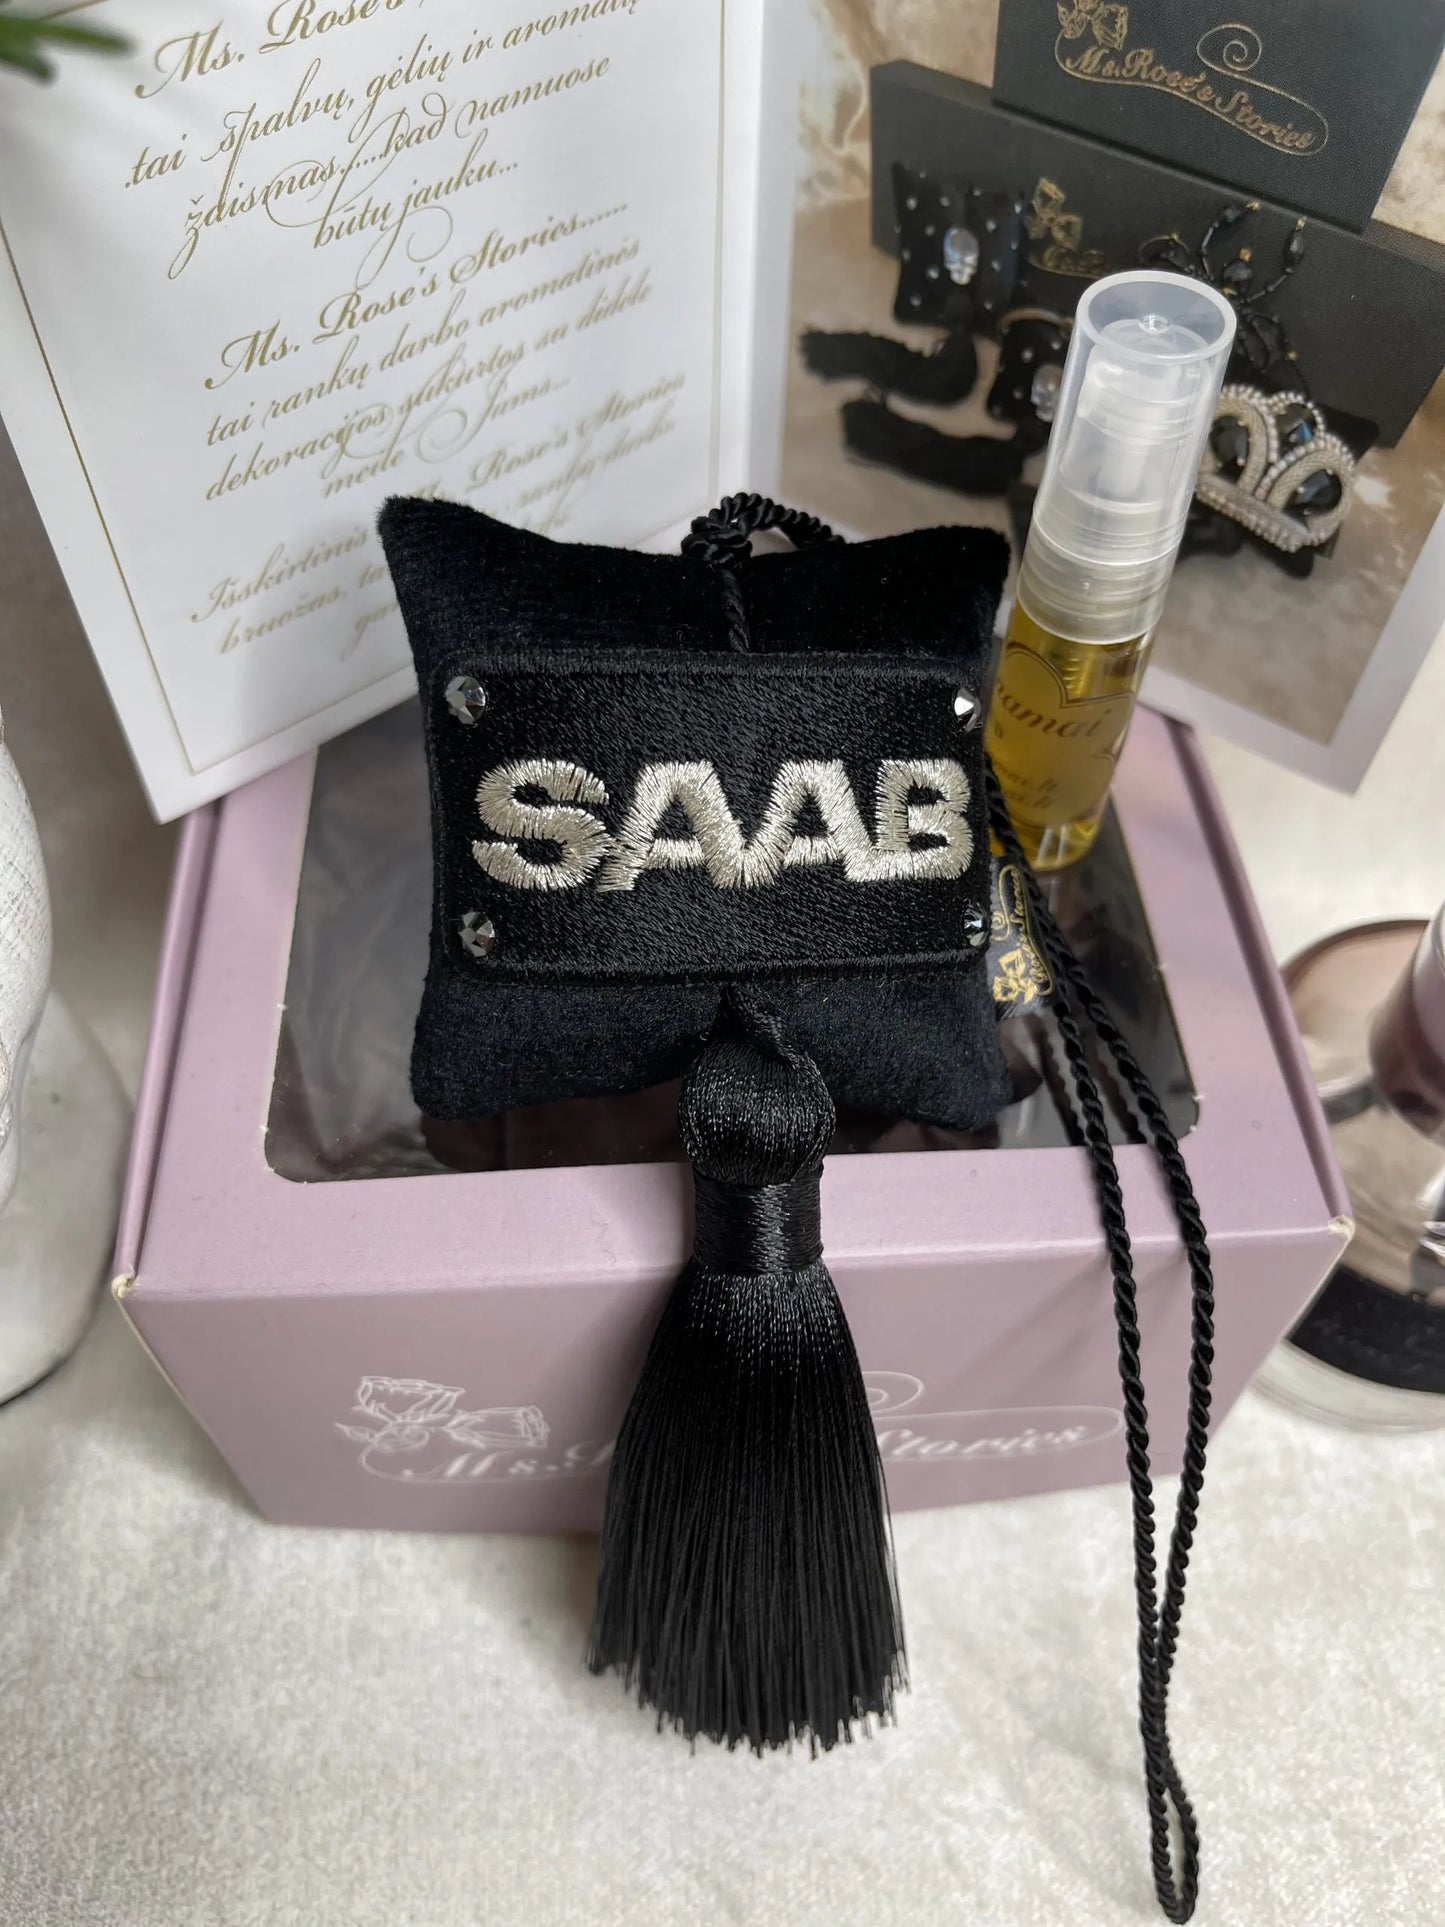 Hanging fragrance "SAAB"